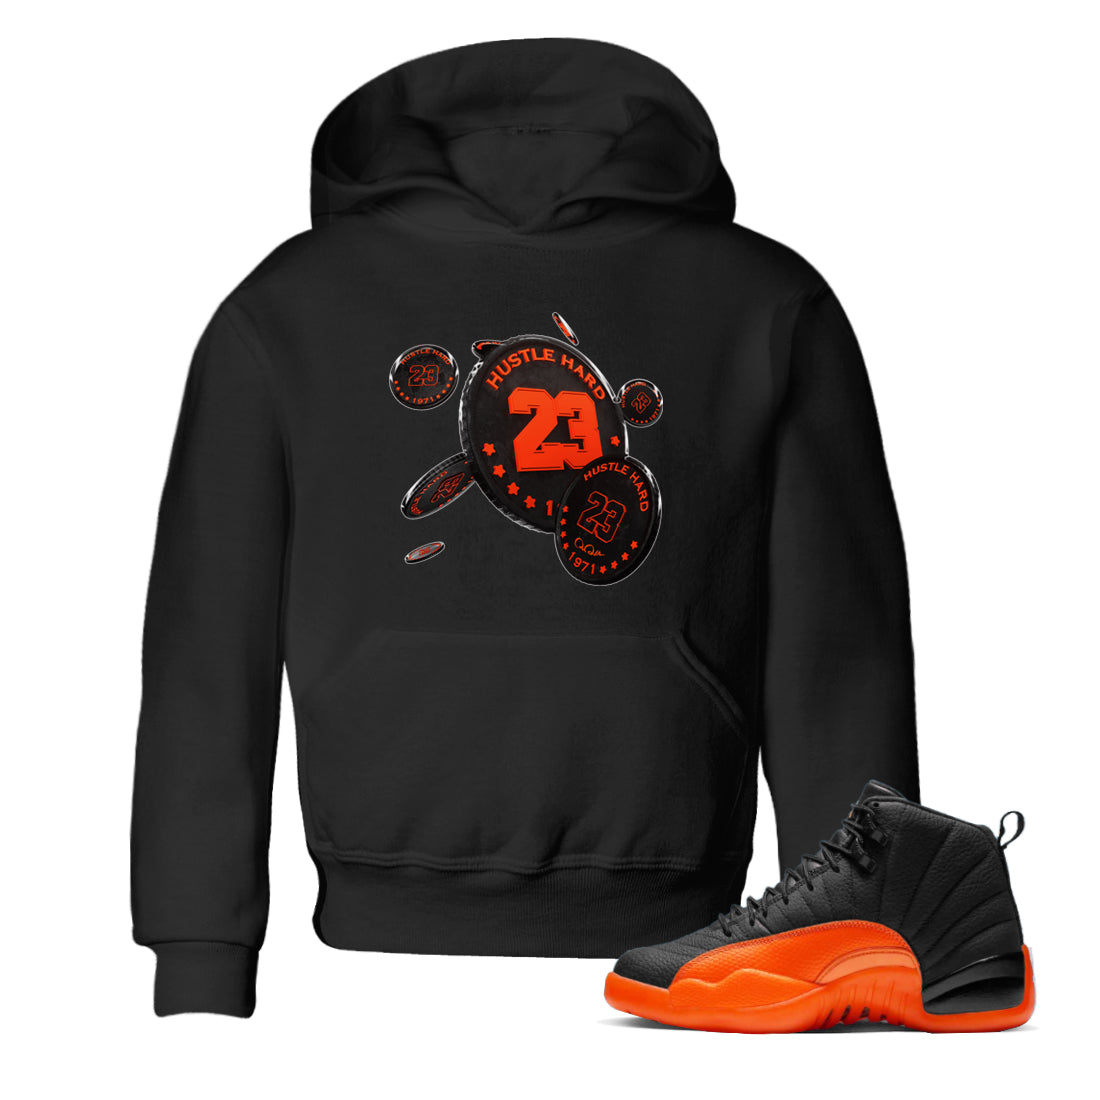 Air Jordan 12 Brilliant Orange Sneaker Match Tees Coin Drop Sneaker Tees AJ12 Brilliant Orange Sneaker Release Tees Kids Shirts Black 1